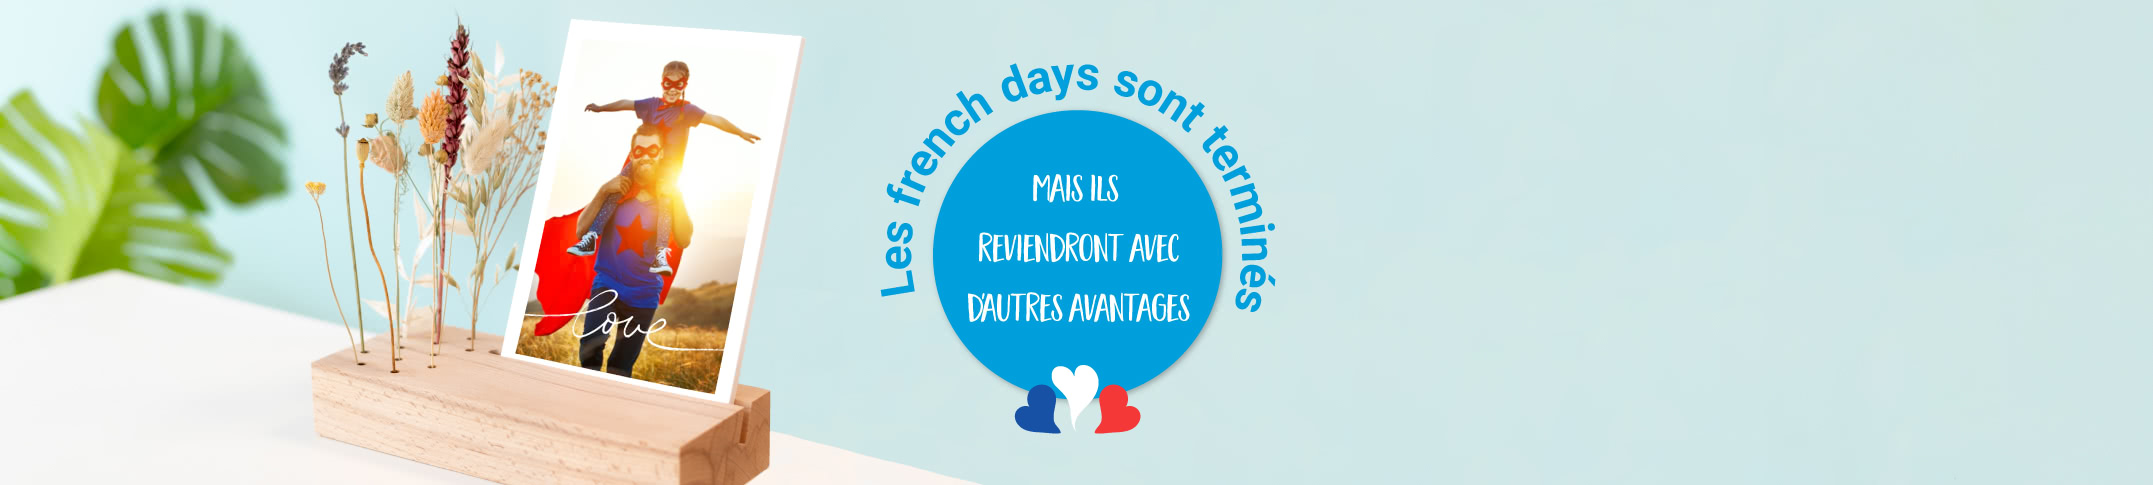 Promotion French days smartphoto